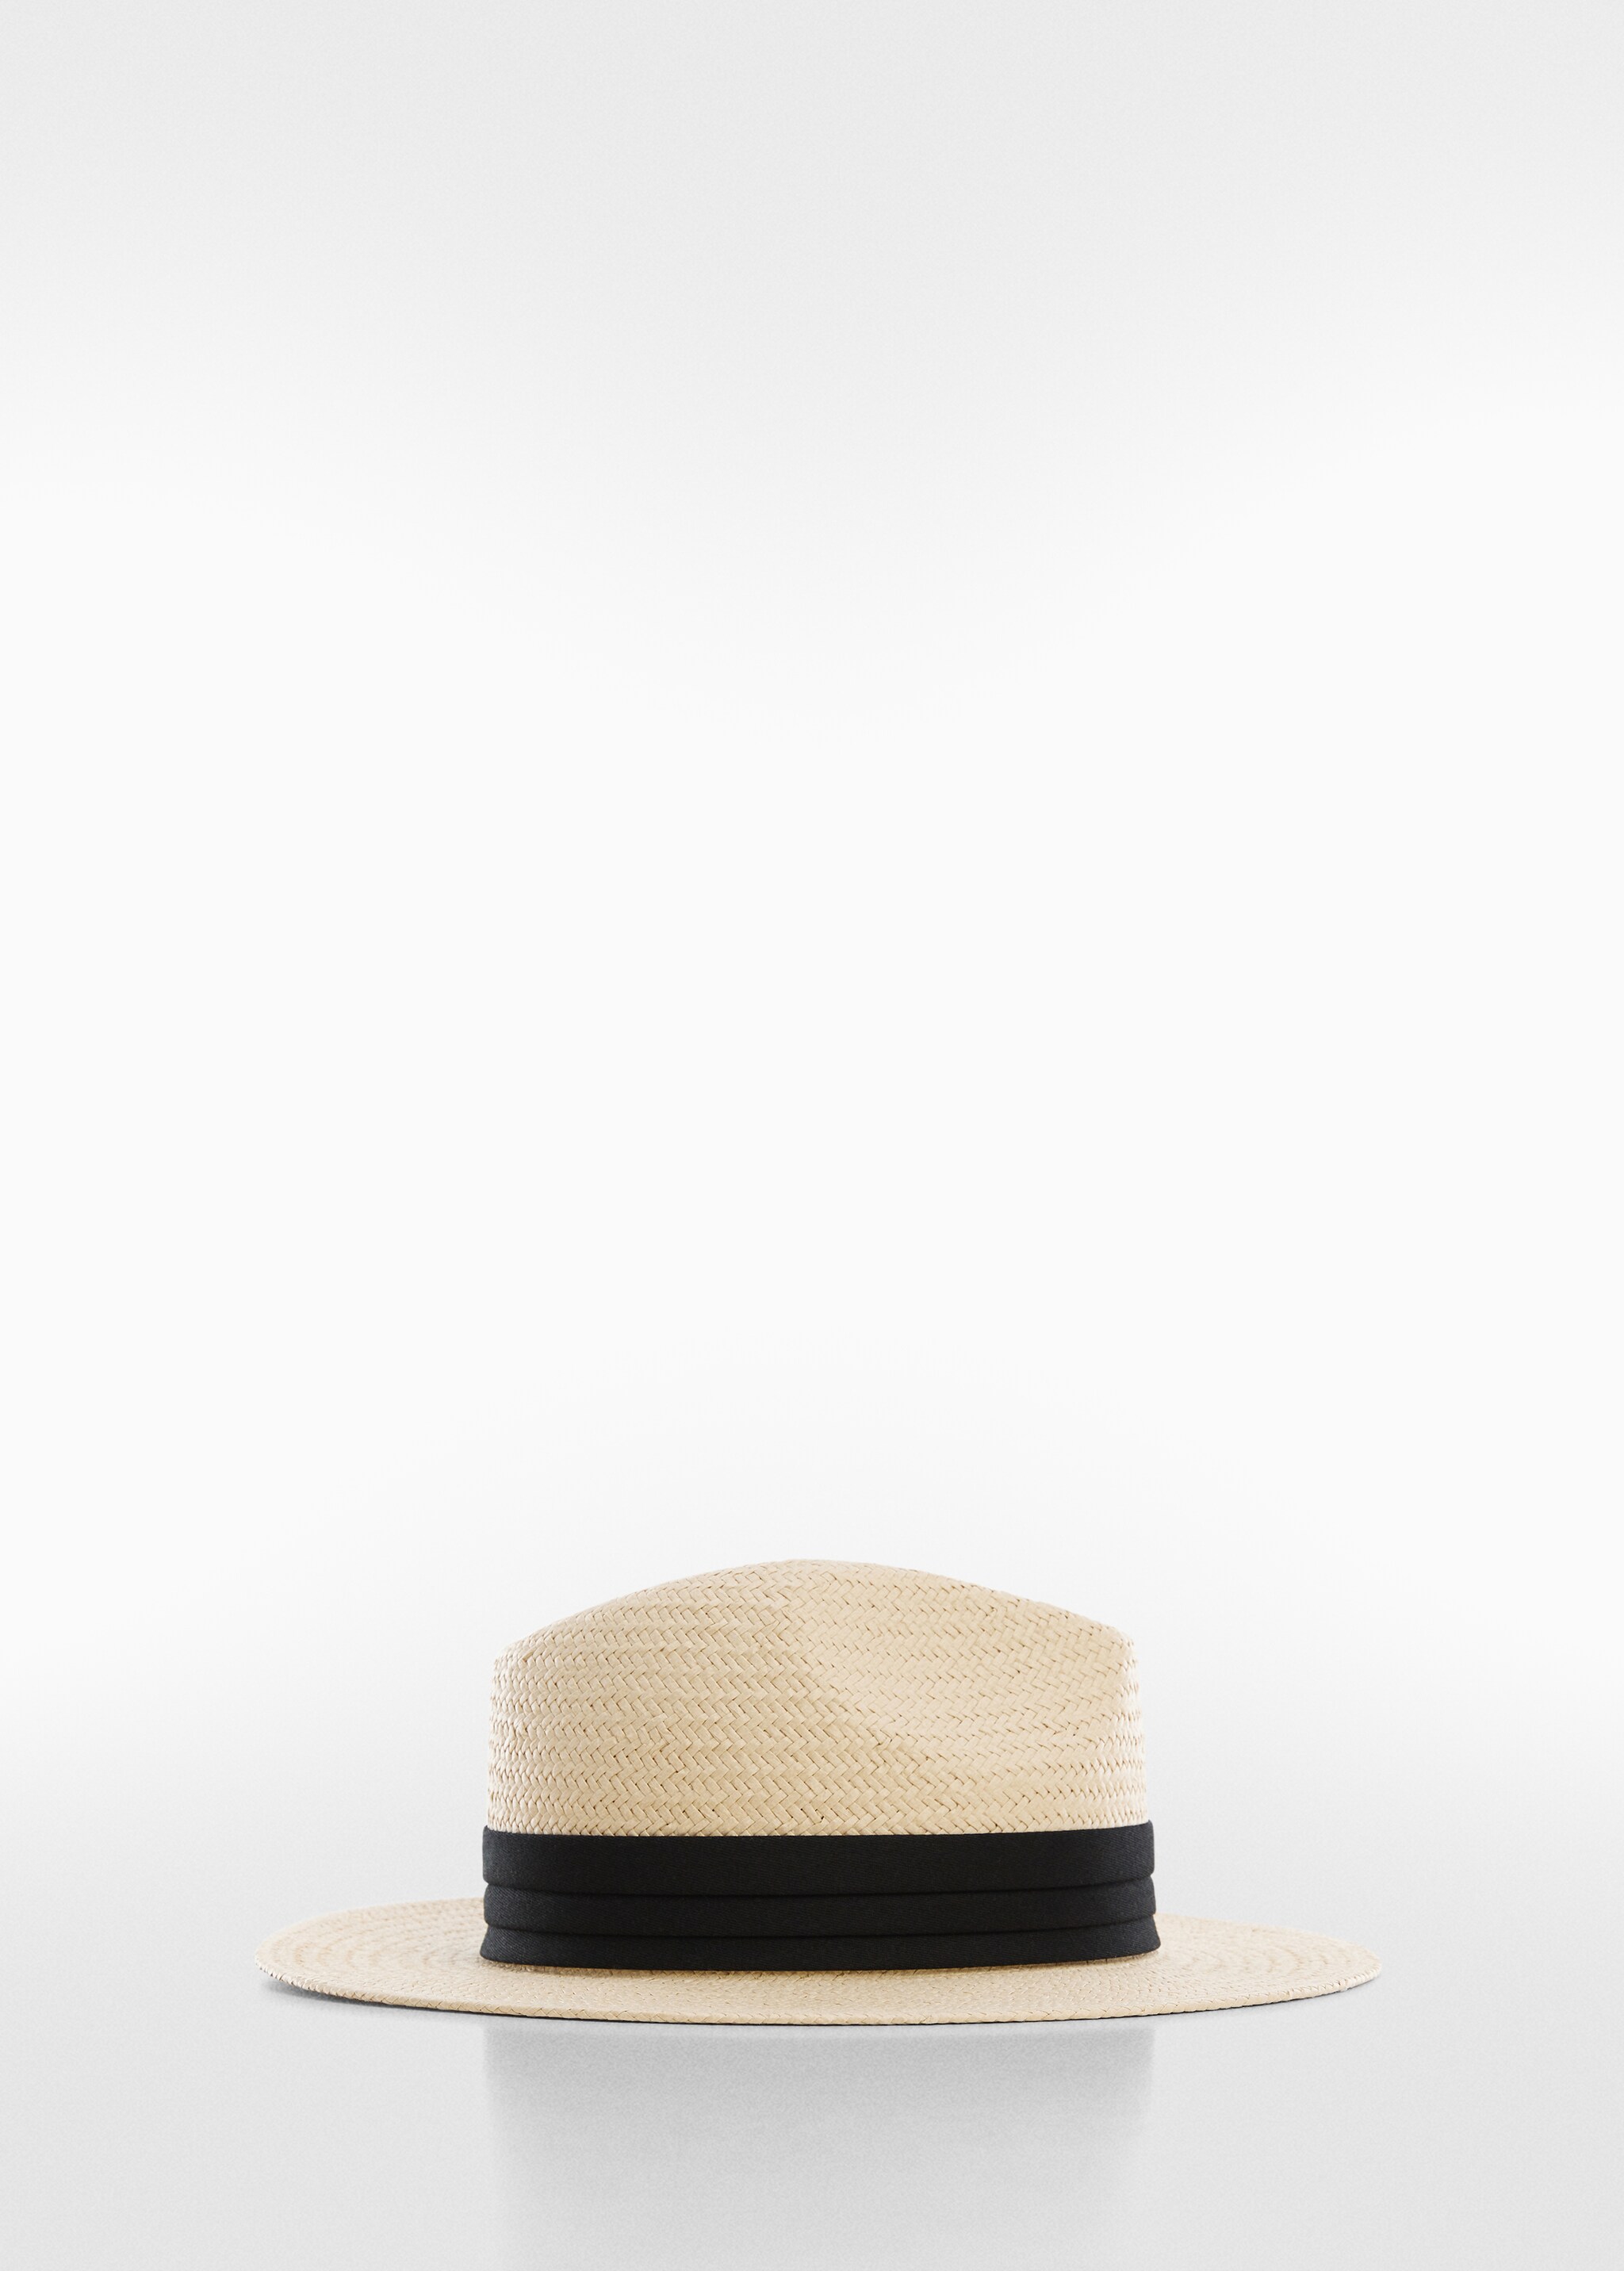 Doğal elyaf şeritli şapka  - Modelsiz ürün